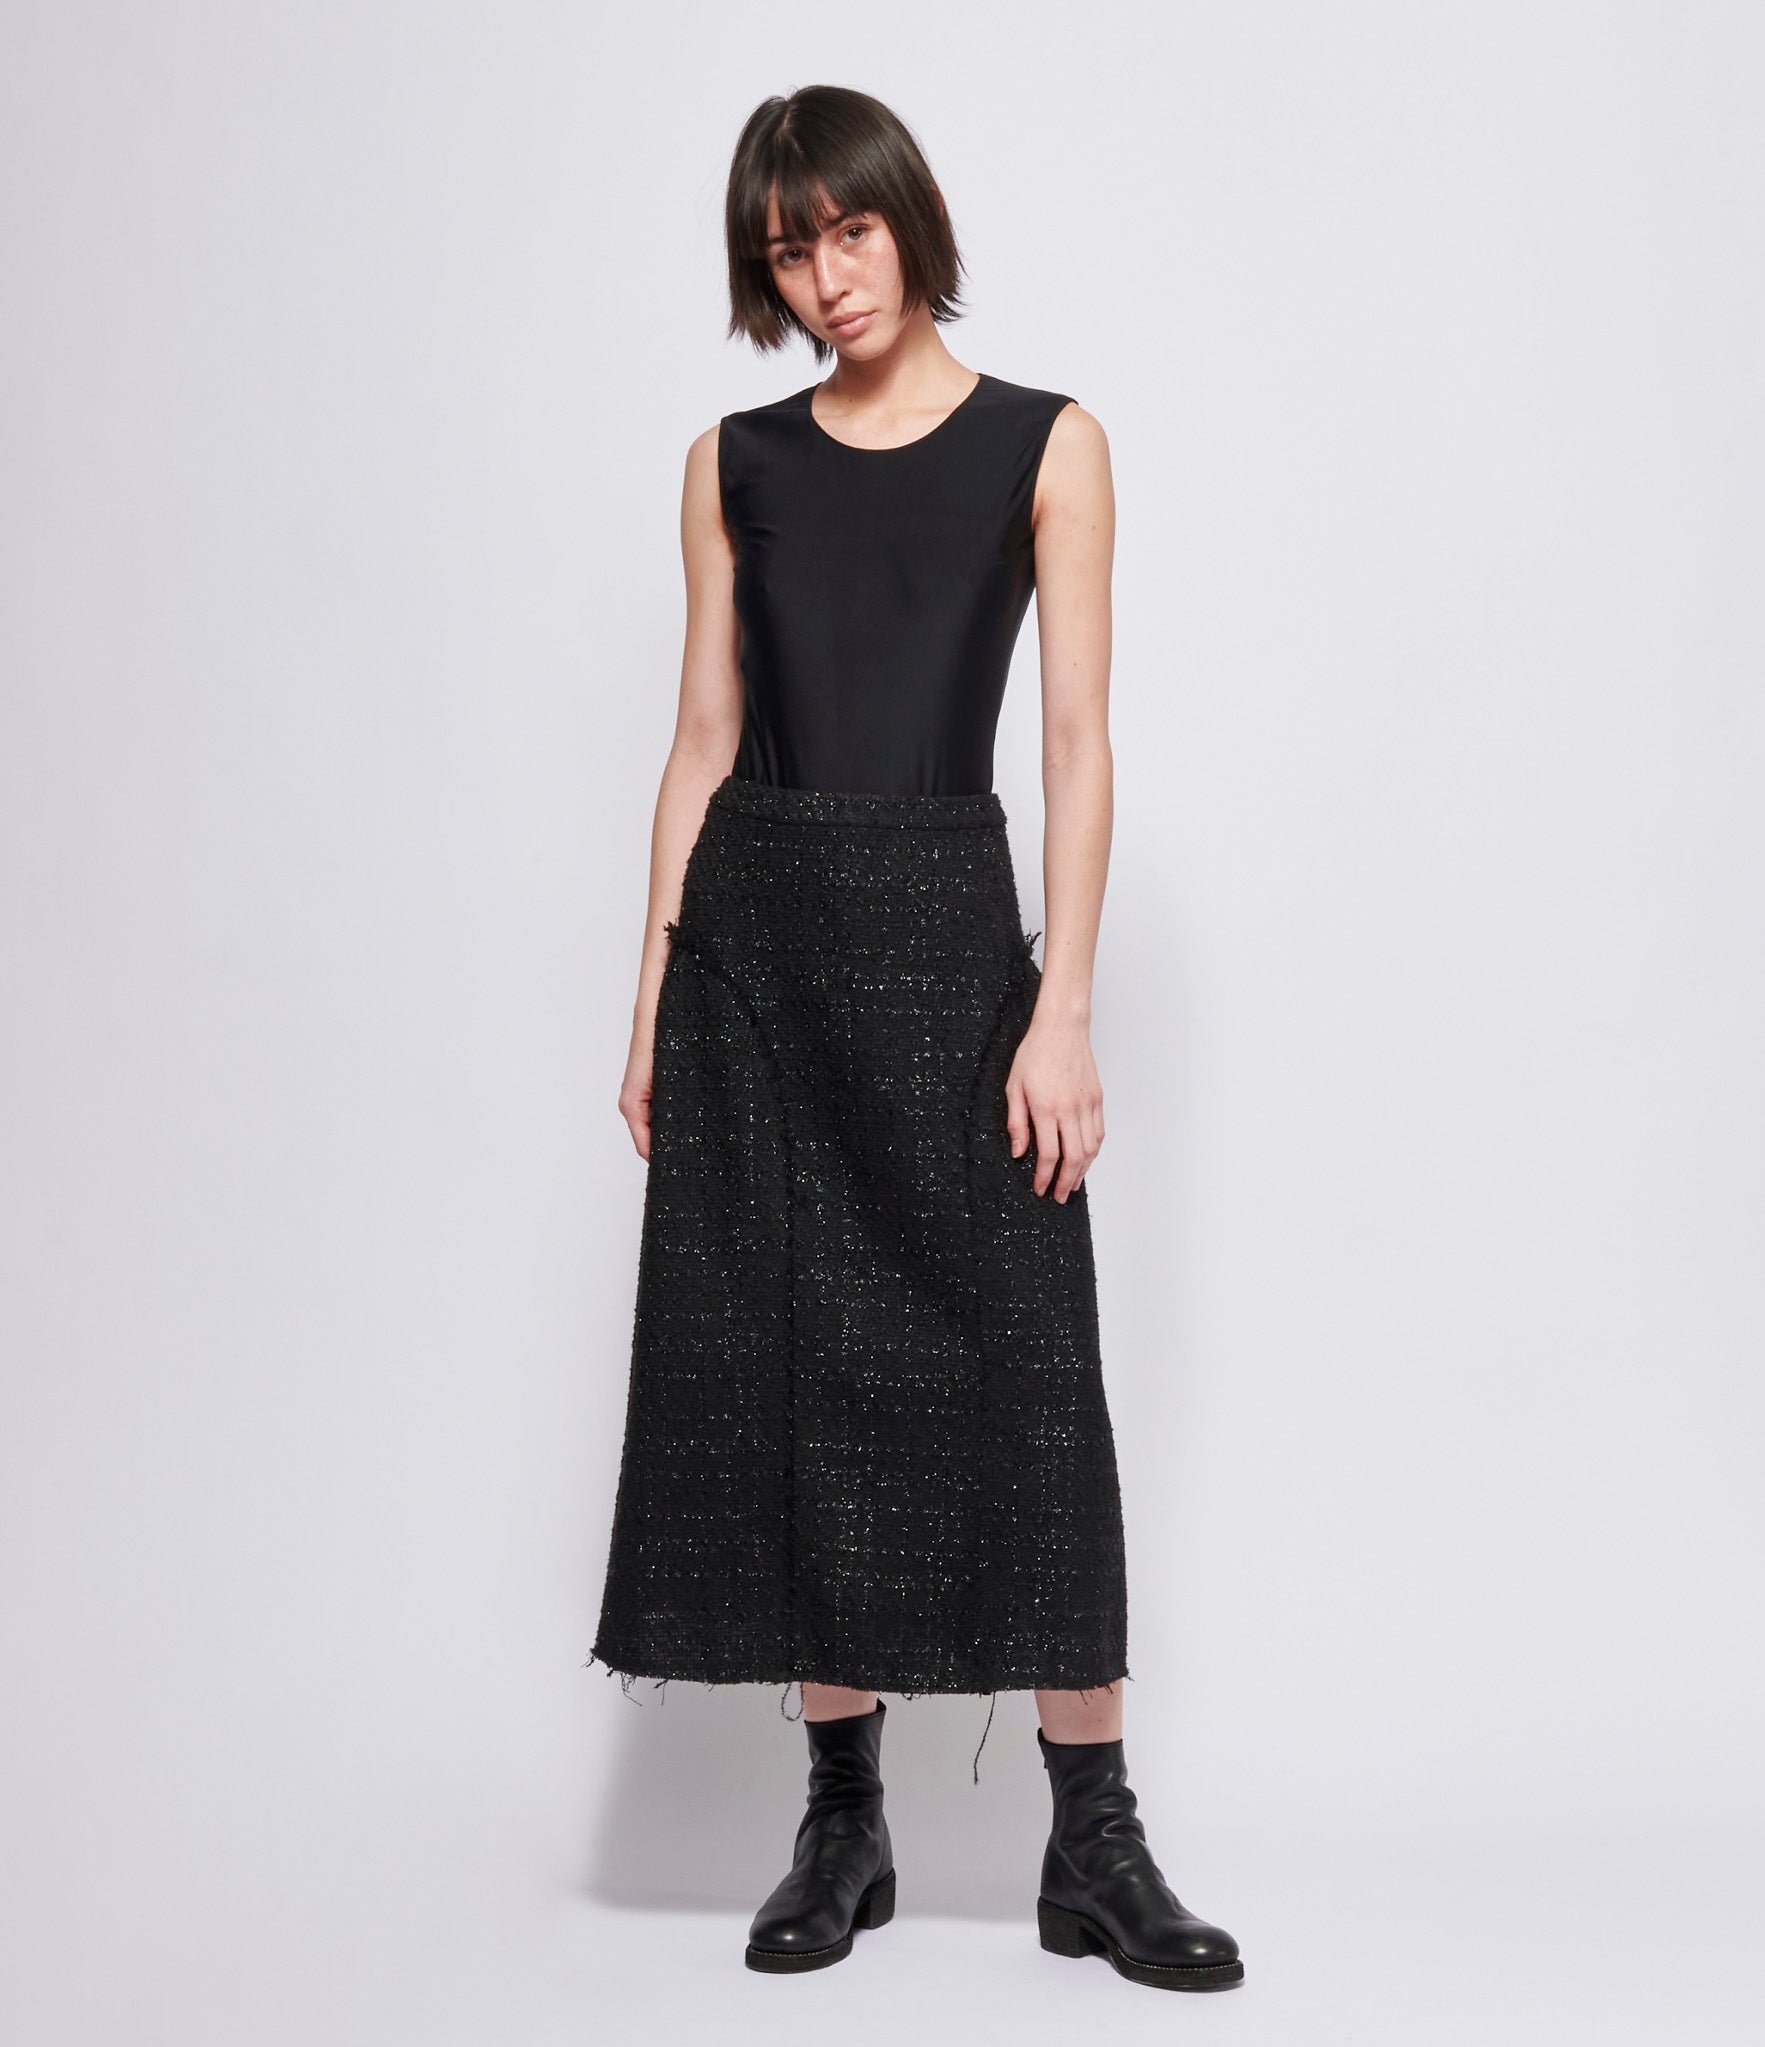 Replika Black Tweed Skirt